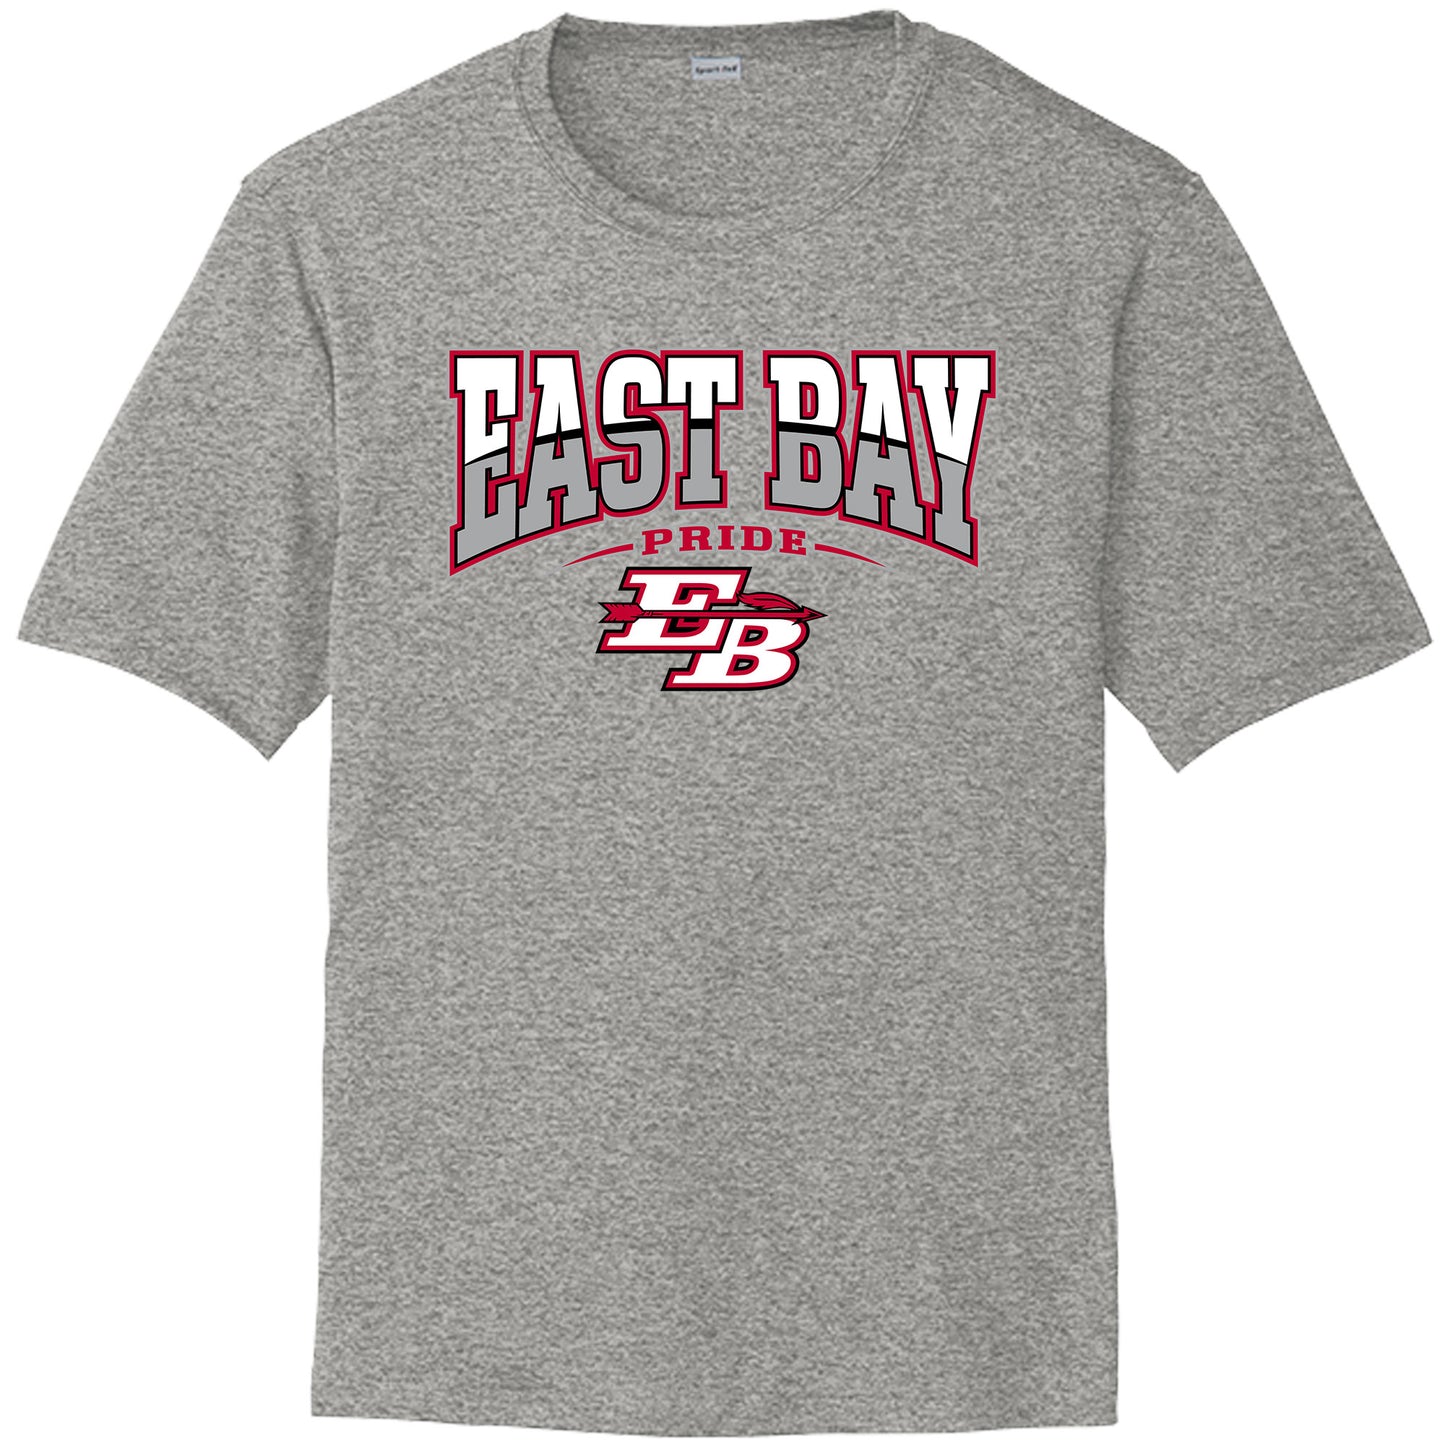 East Bay High School Drifit Shirt with Printed East Bay Logo